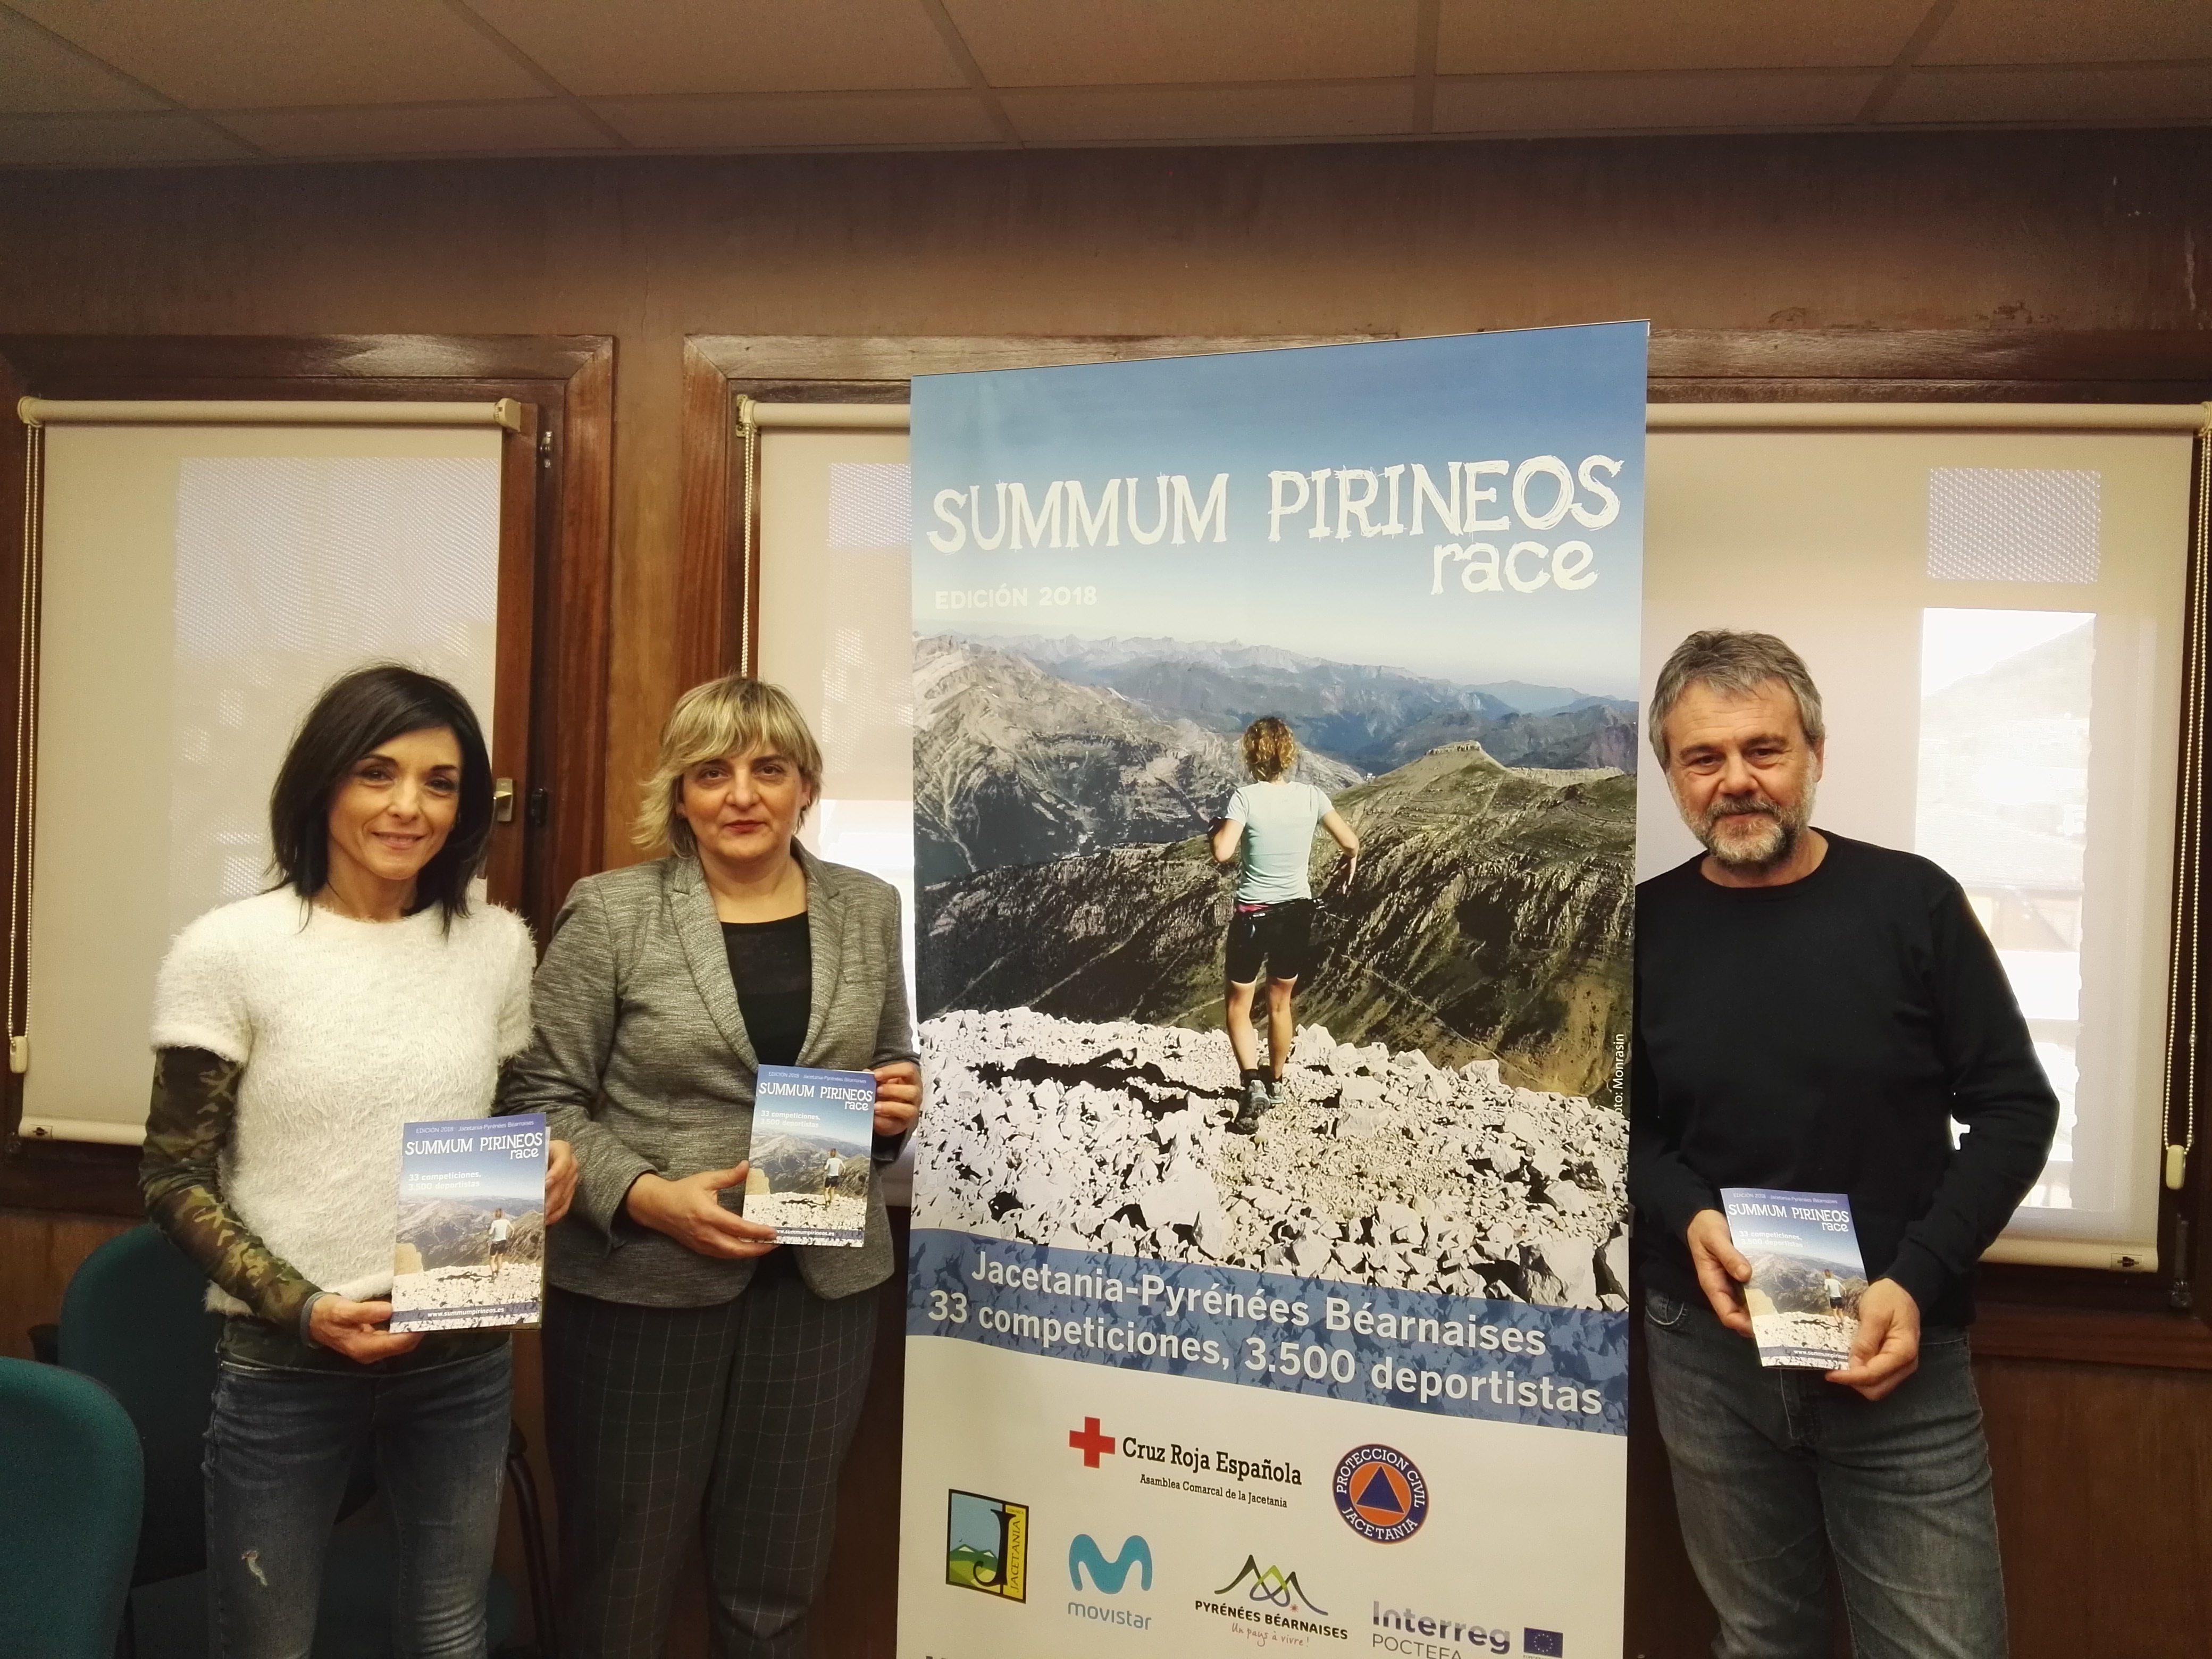 La Jacetania edita la Gua Deportiva Summum Pirineos Race 2018